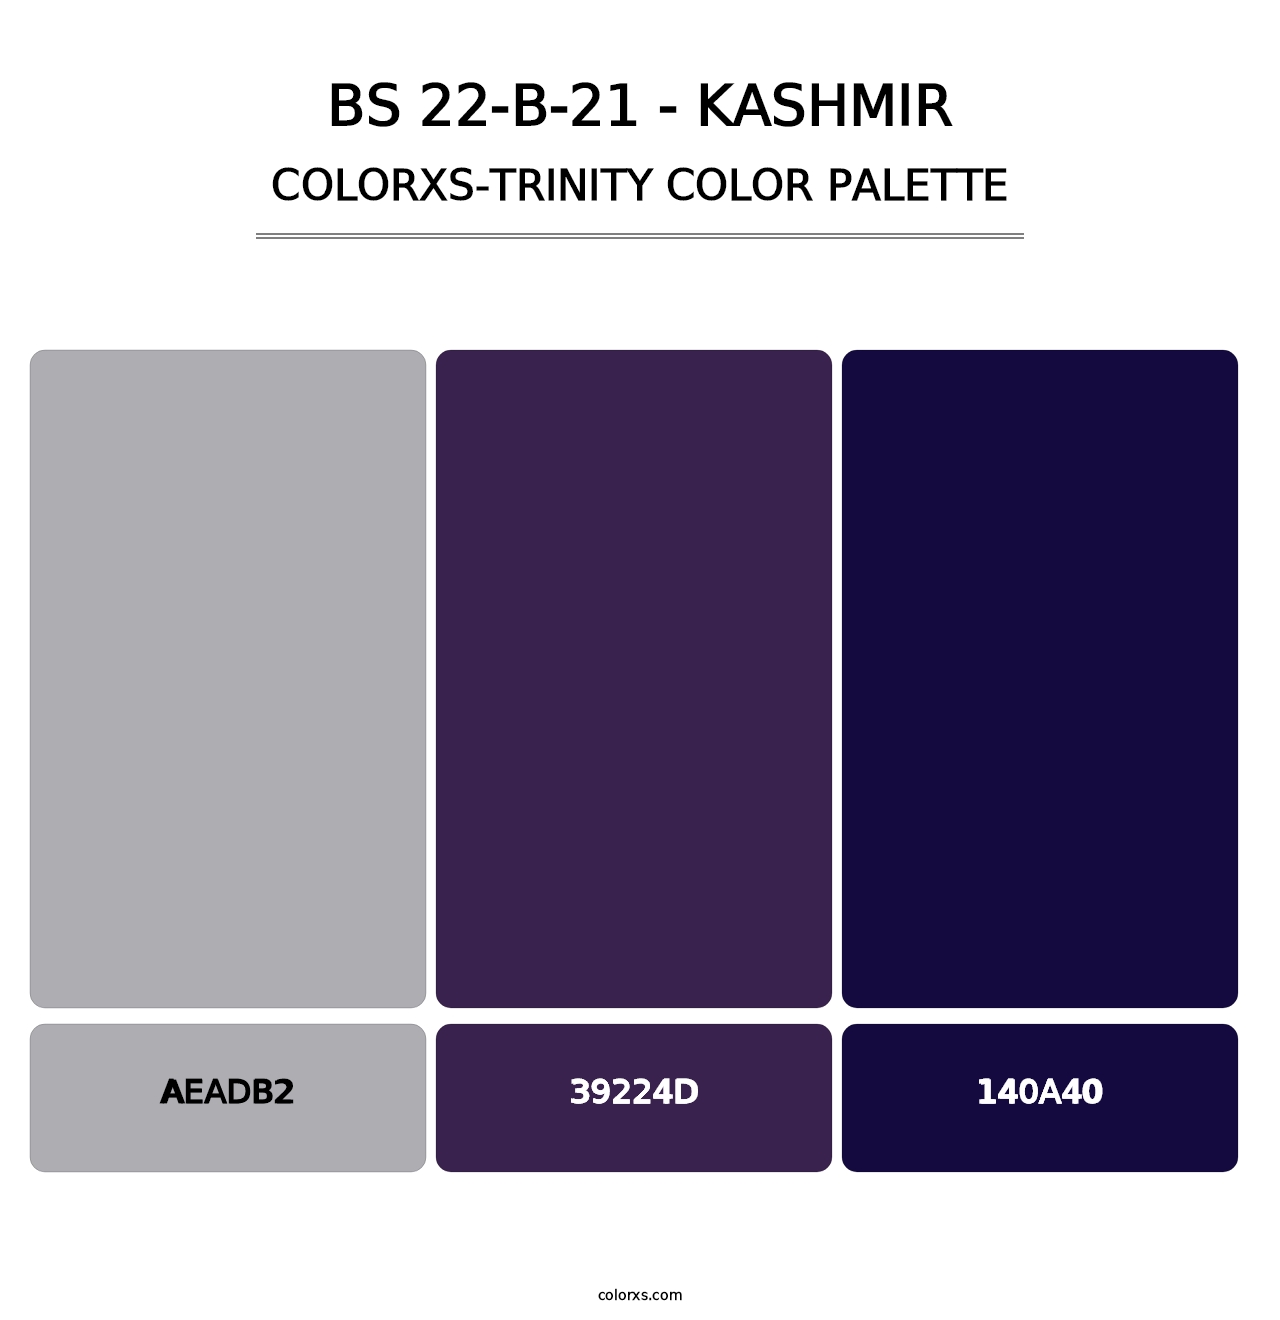 BS 22-B-21 - Kashmir - Colorxs Trinity Palette